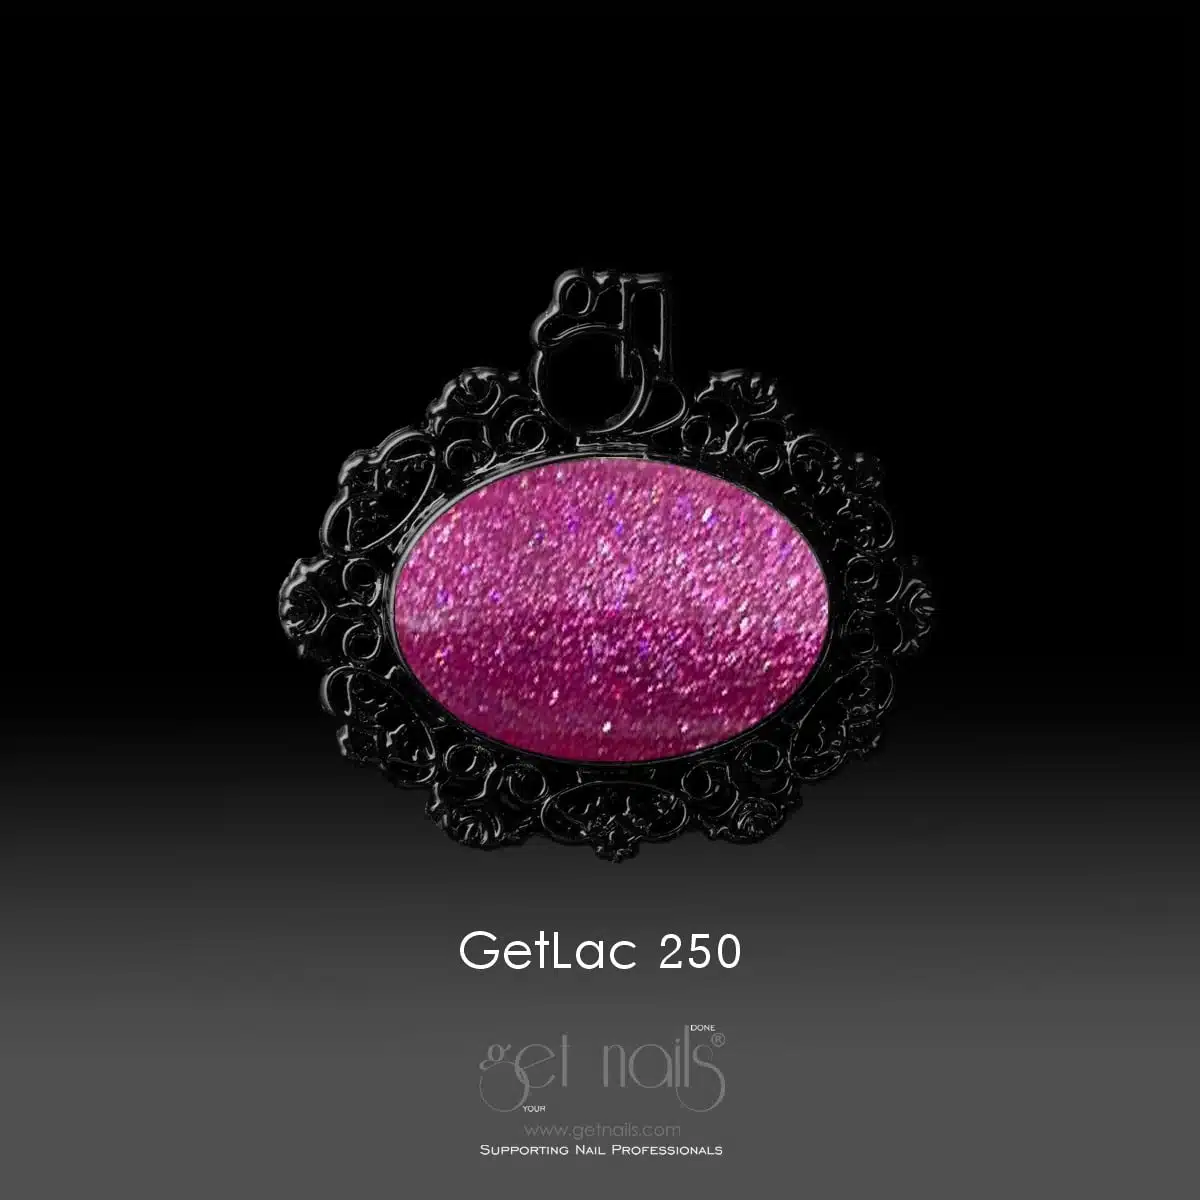 Get Nails Austria - GetLac 250 15г